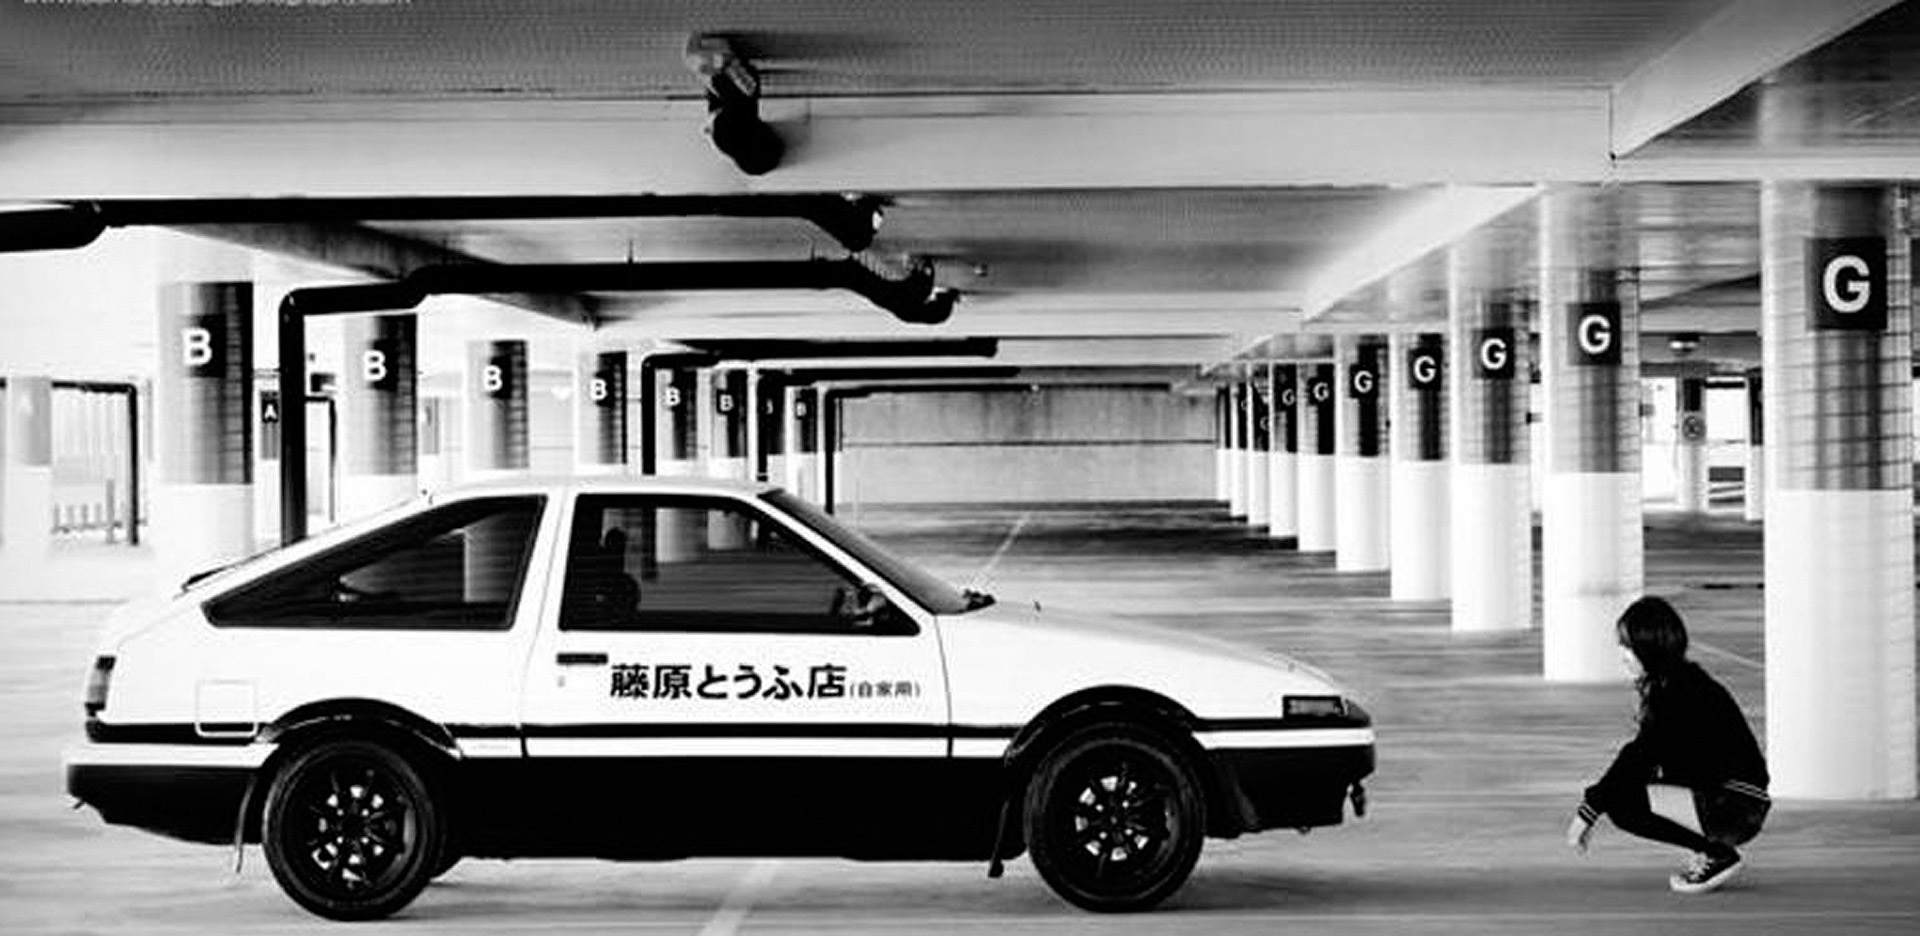 Photos Imid Pics Wallpaper 9th Generation Honda Civic